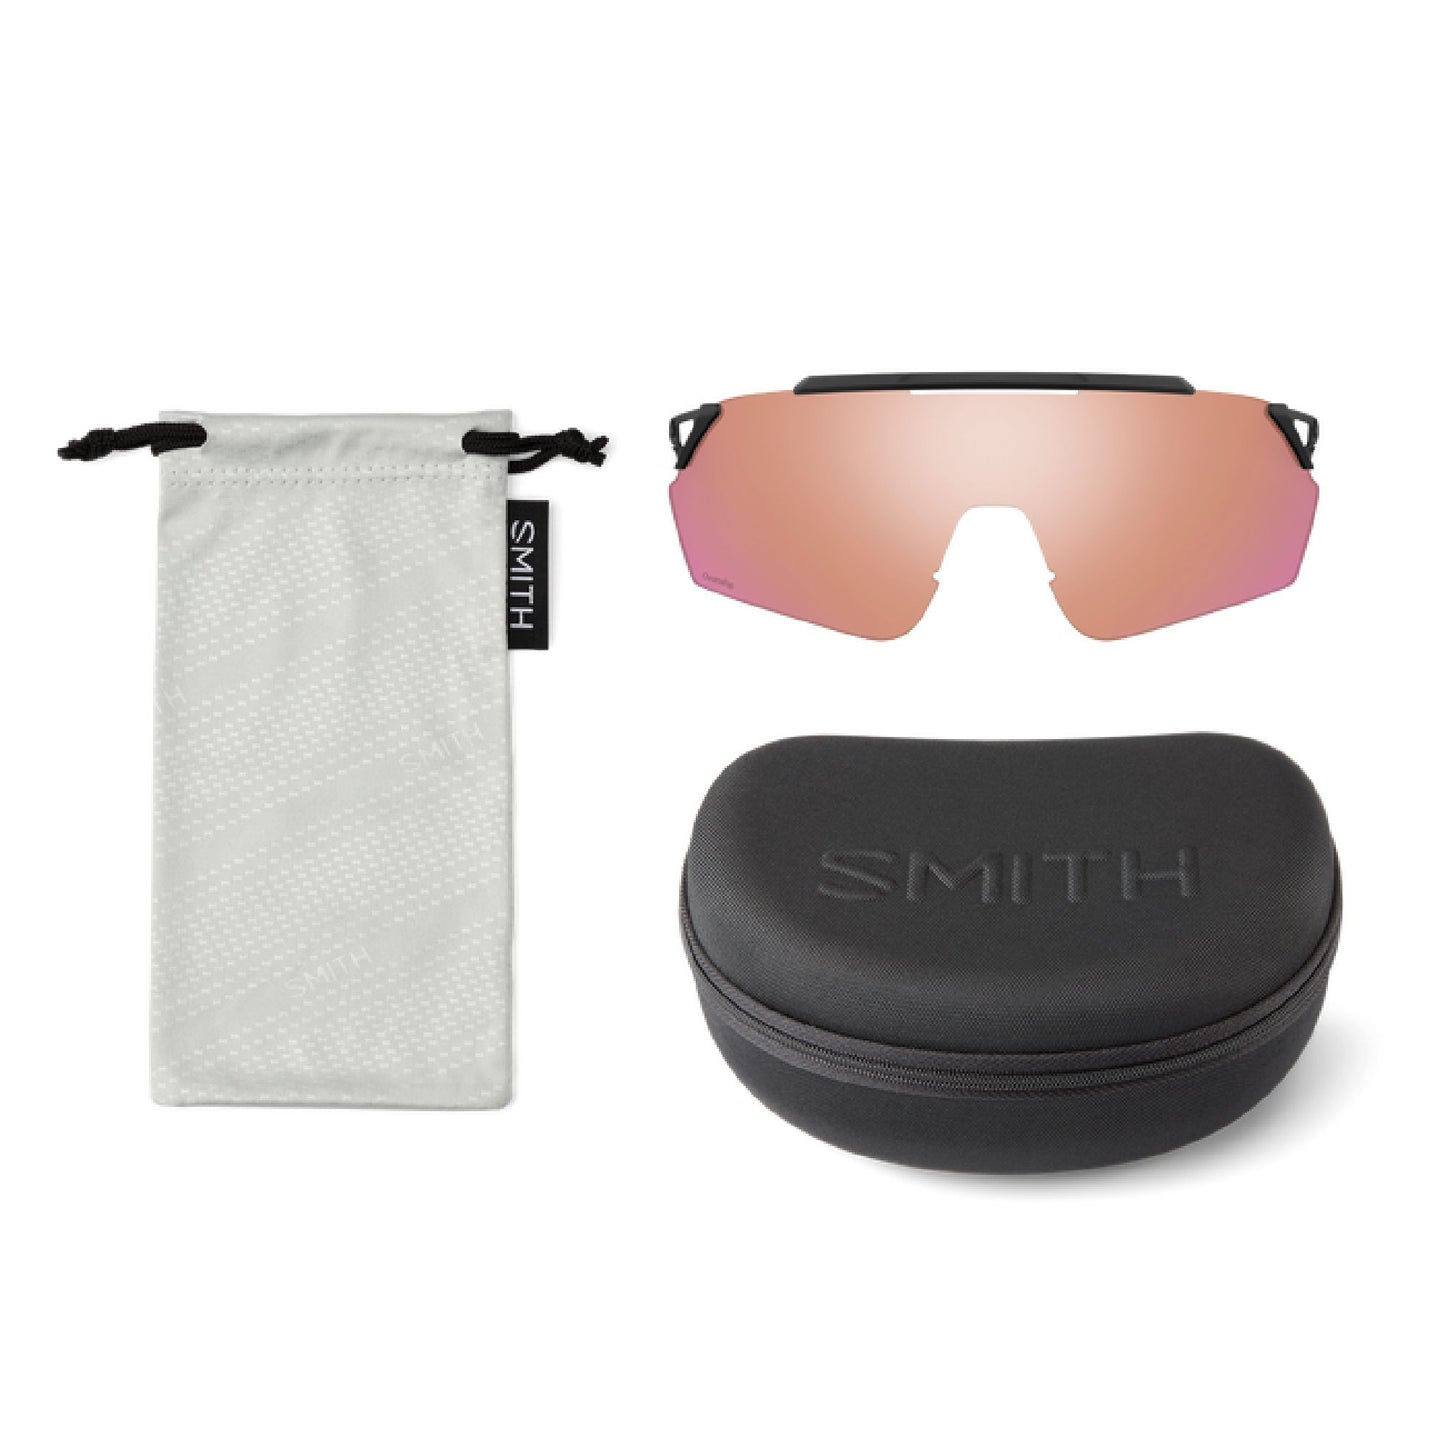 Smith Ruckus Sunglasses Matte Black / ChromaPop Opal Mirror Sunglasses